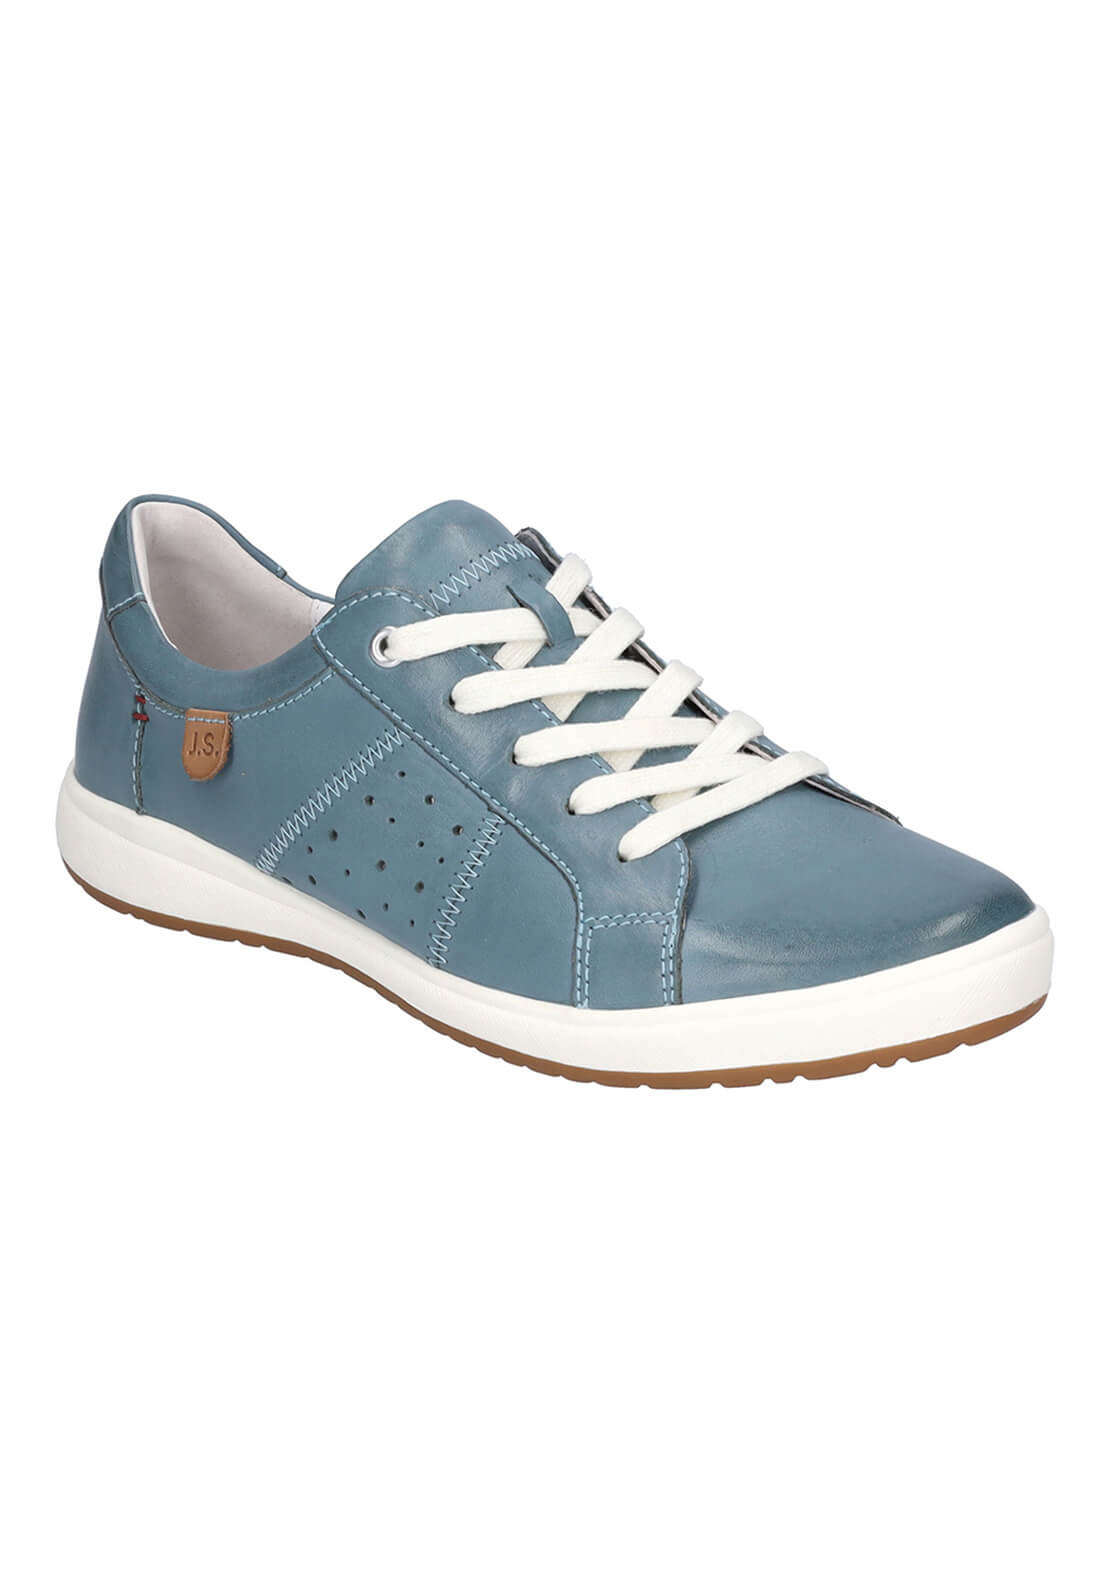 Josef Seibel Caren 01 Shoes - Blue 1 Shaws Department Stores